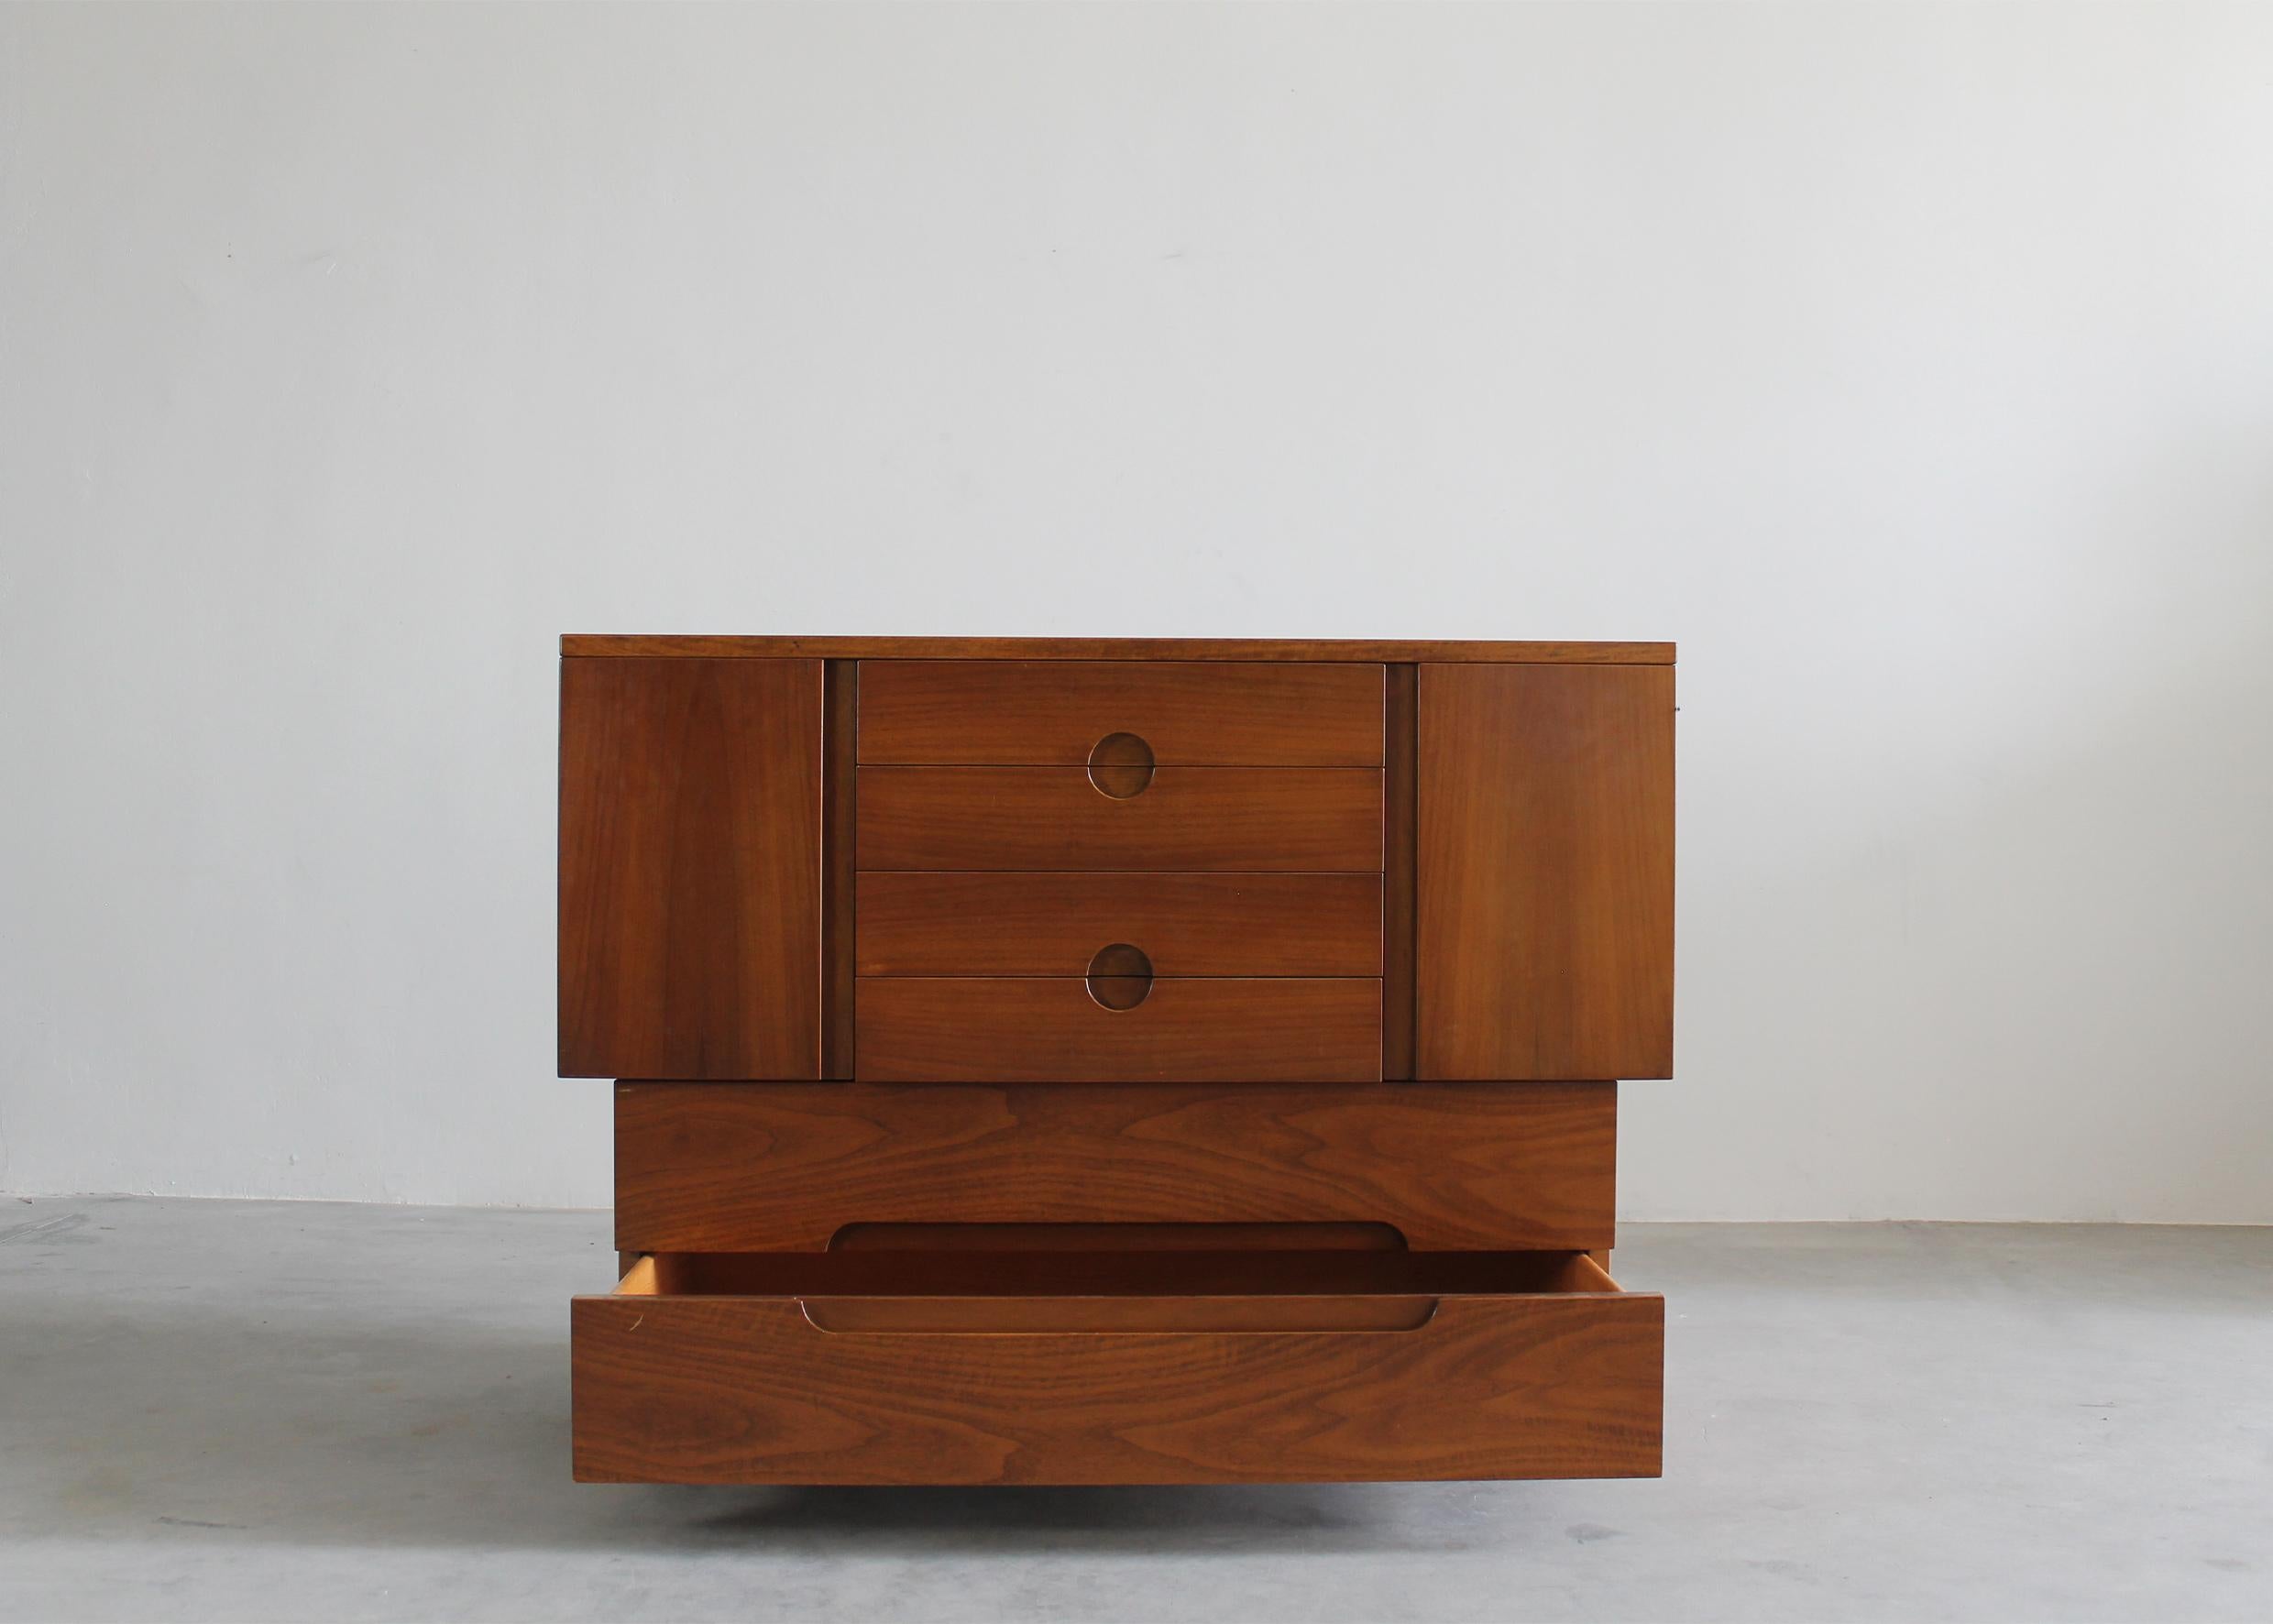 Other Giovanni Michelucci Cabinet Serena in Walnut Wood by Poltronova 1950s Italy